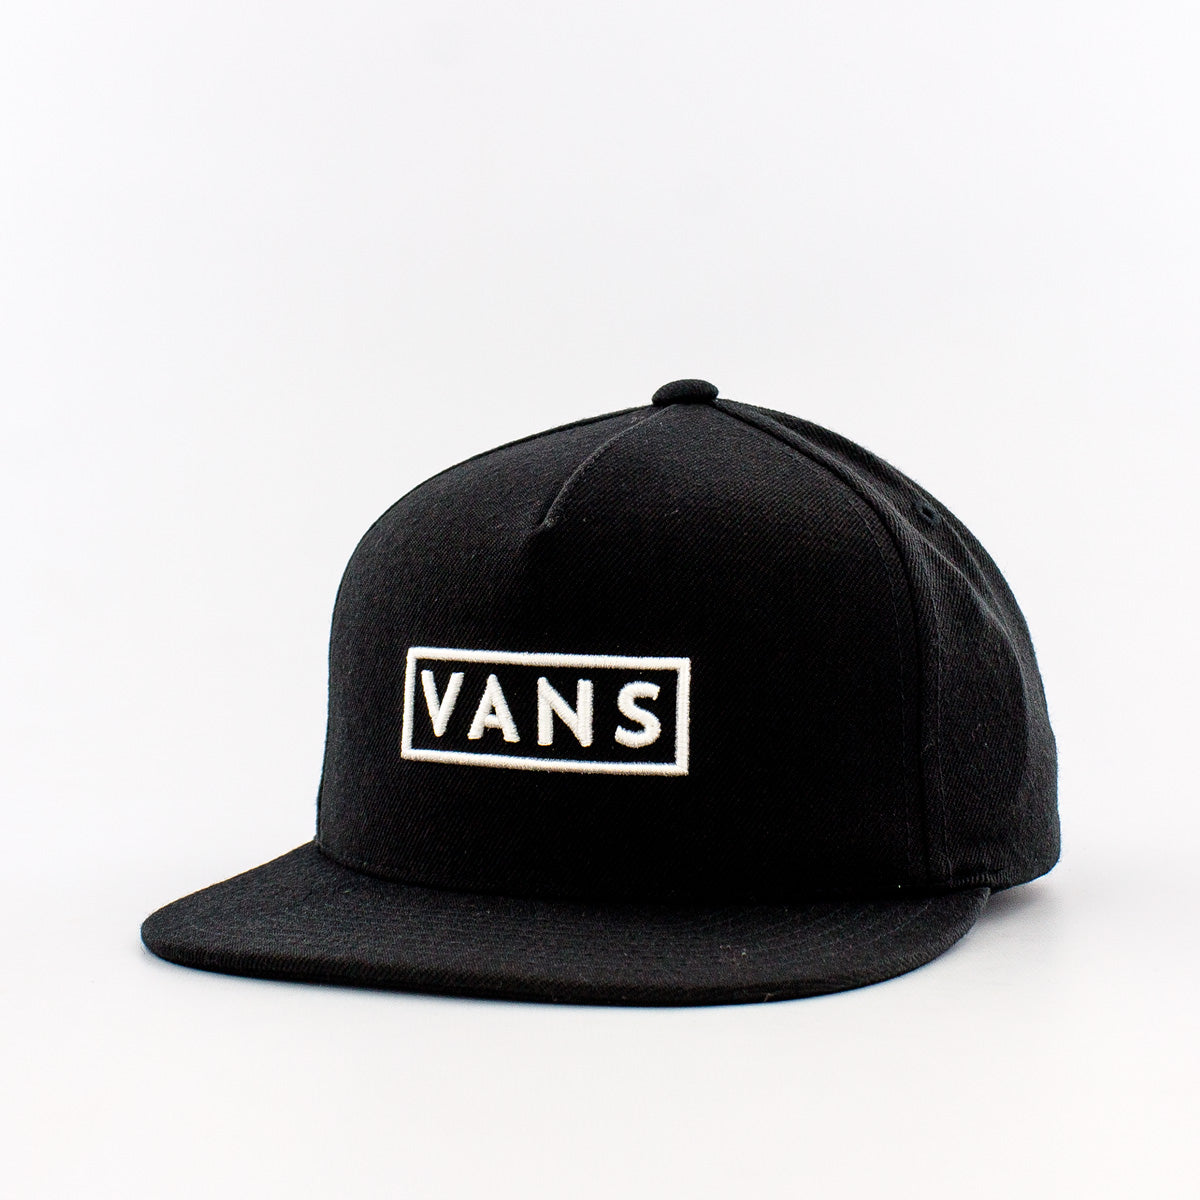 black and white vans hat